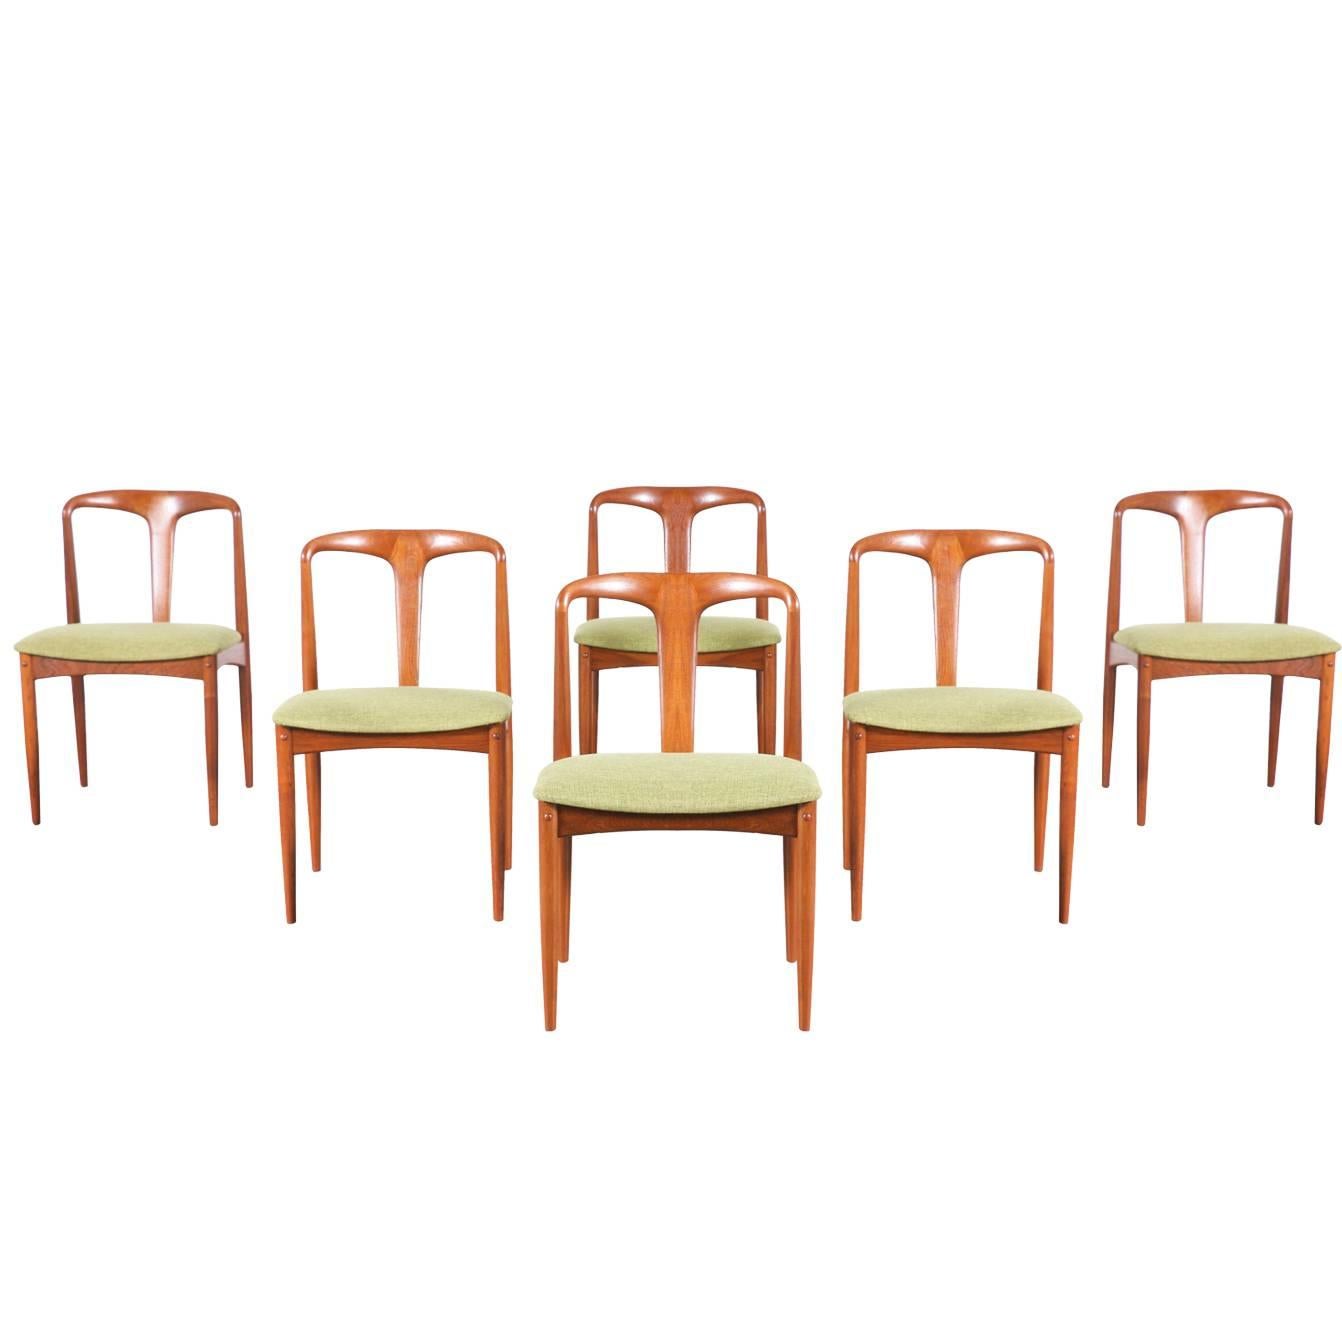 Johannes Andersen “Julianne” Teak Dining Chairs for Uldum Møbelfabrik